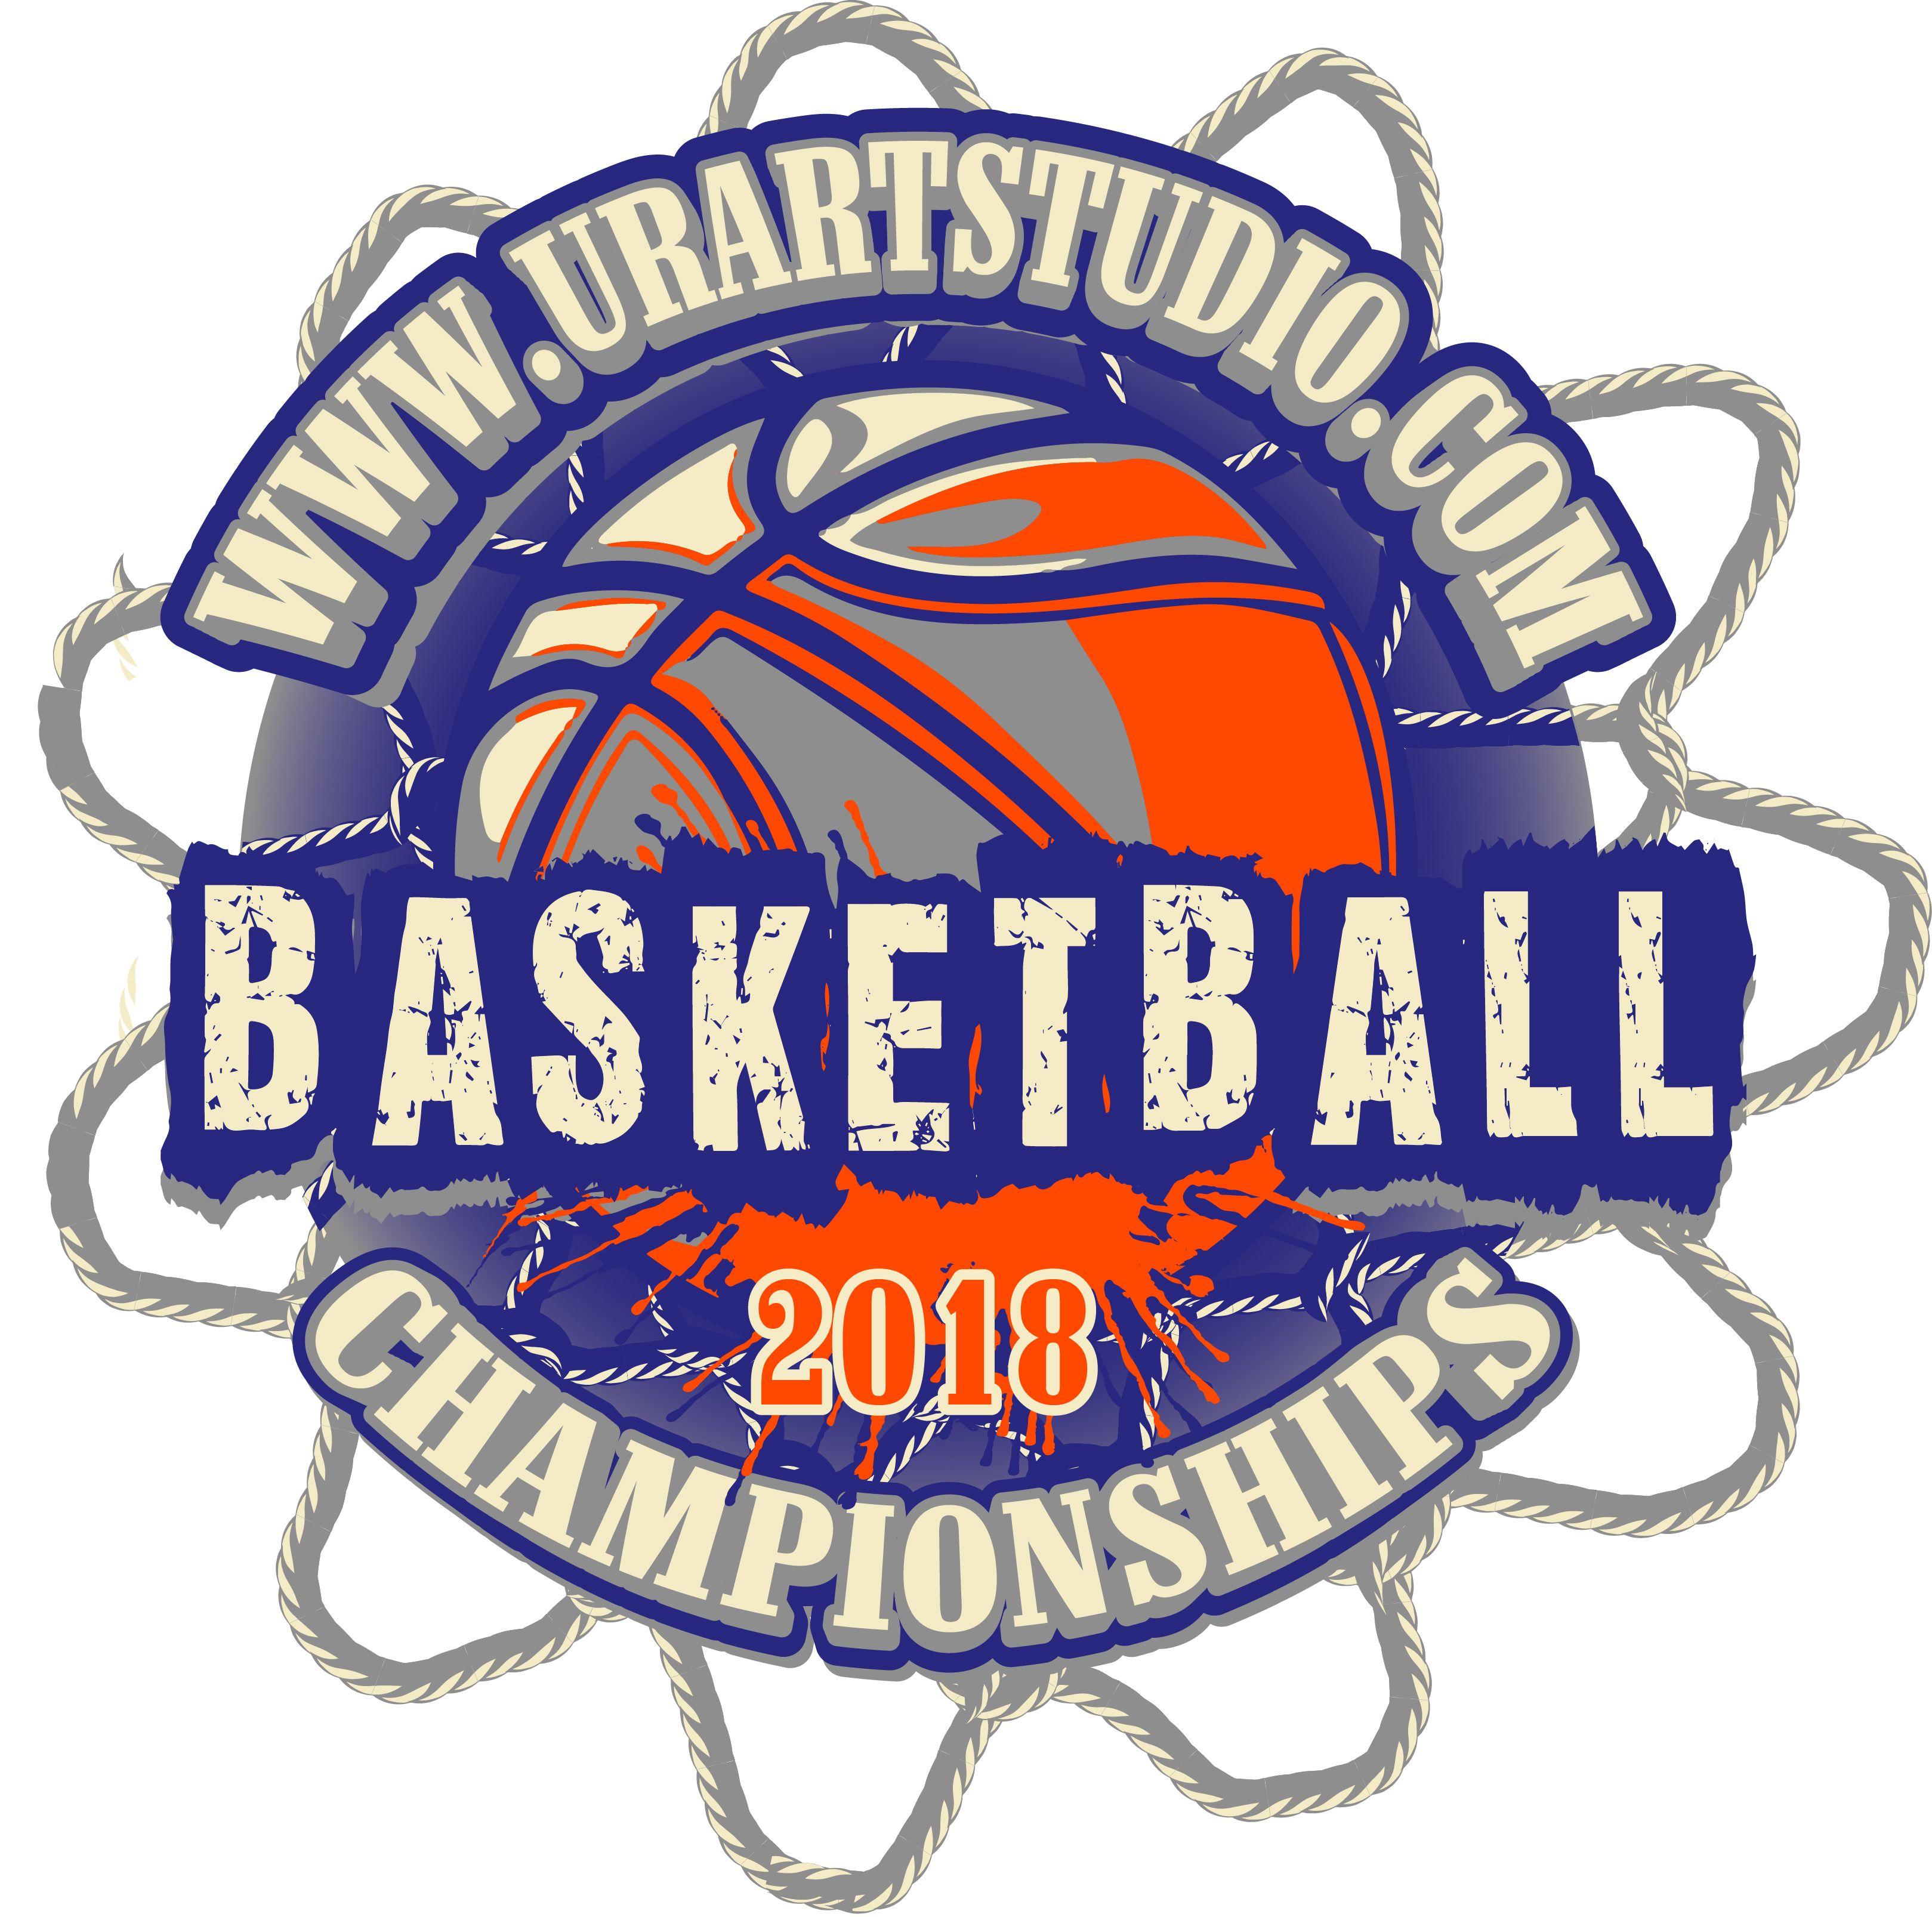 Basketball Vector Logo - BASKETBALL 2018 CHAMPIONSHIPS t-shirt vector logo design for print ...